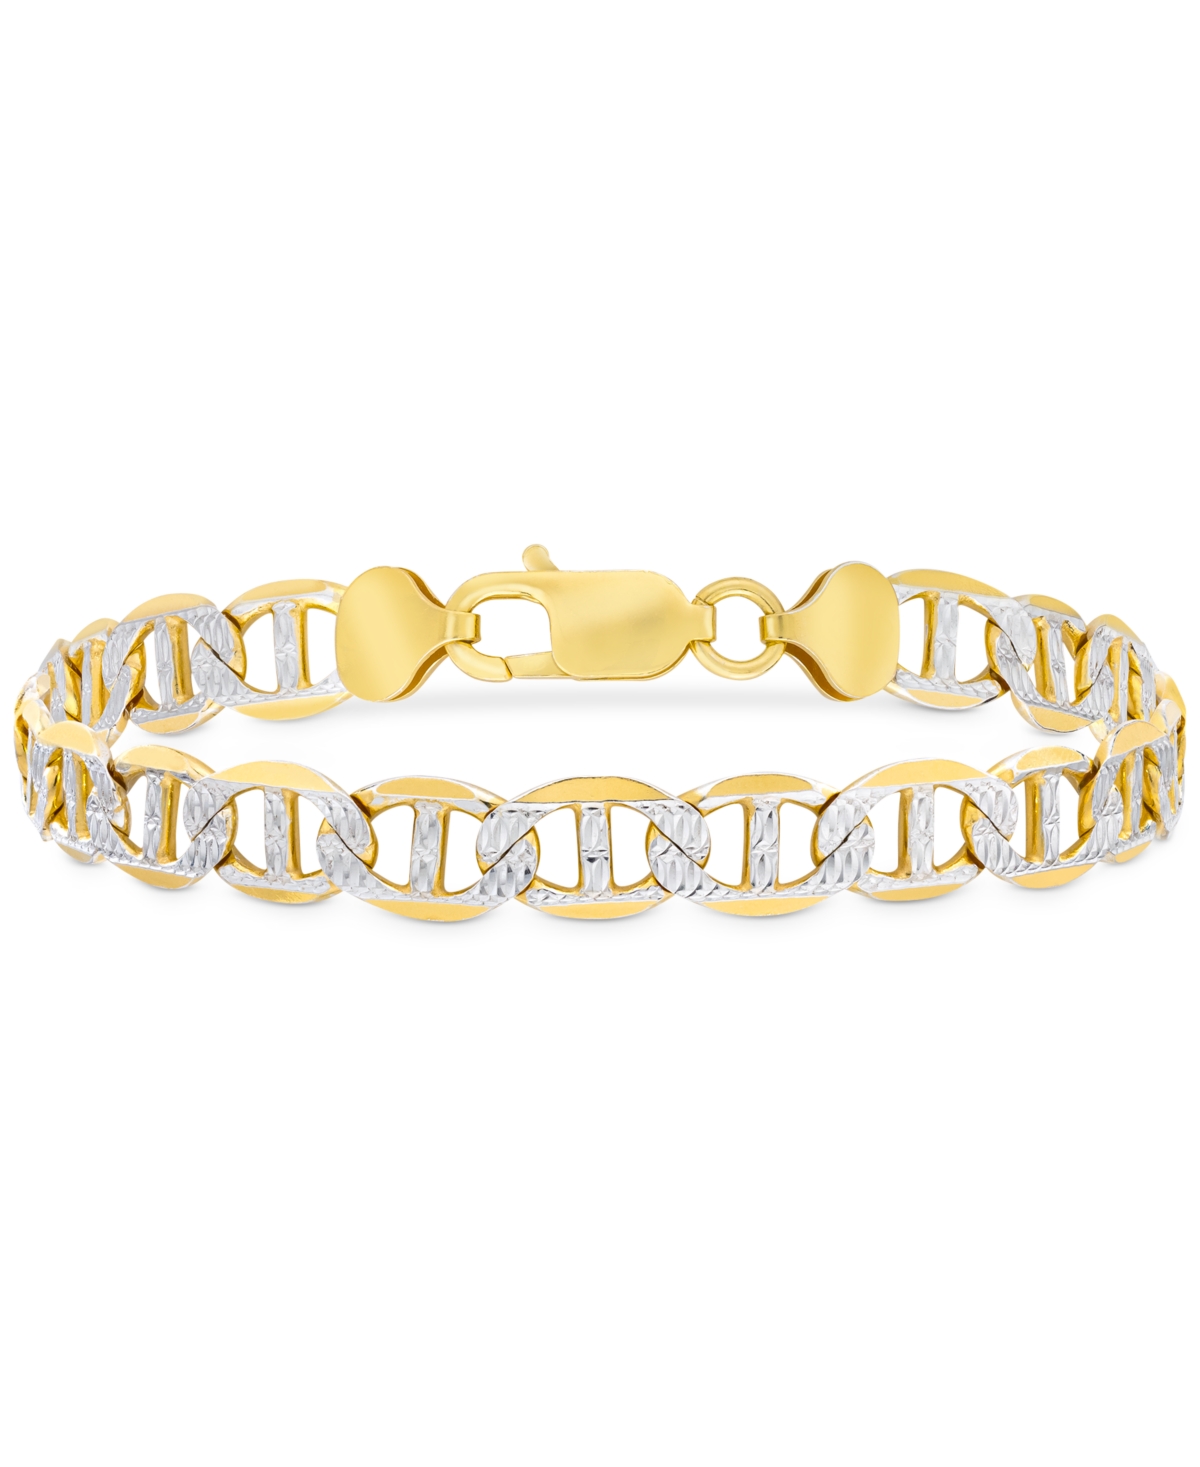 Men's Two-Tone Diamond Cut Mariner Link Bracelet in Sterling Silver & 14k Gold-Plate - Two-Tone